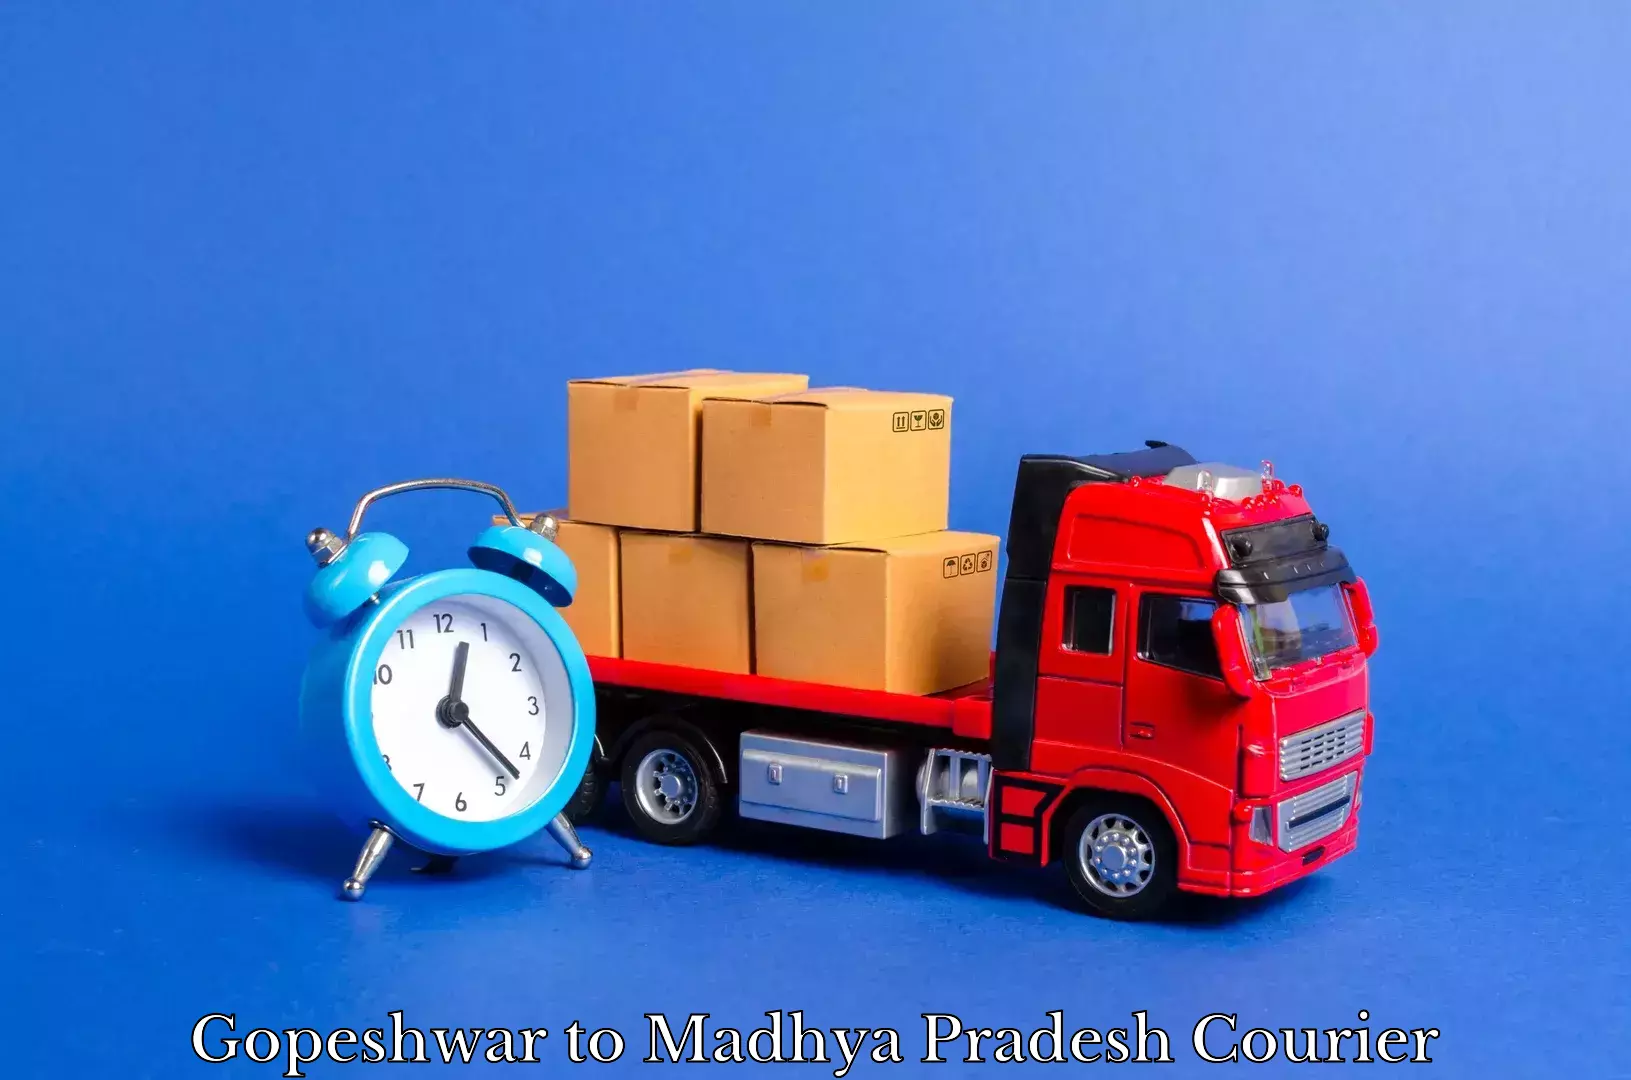 Professional moving company Gopeshwar to Madhya Pradesh